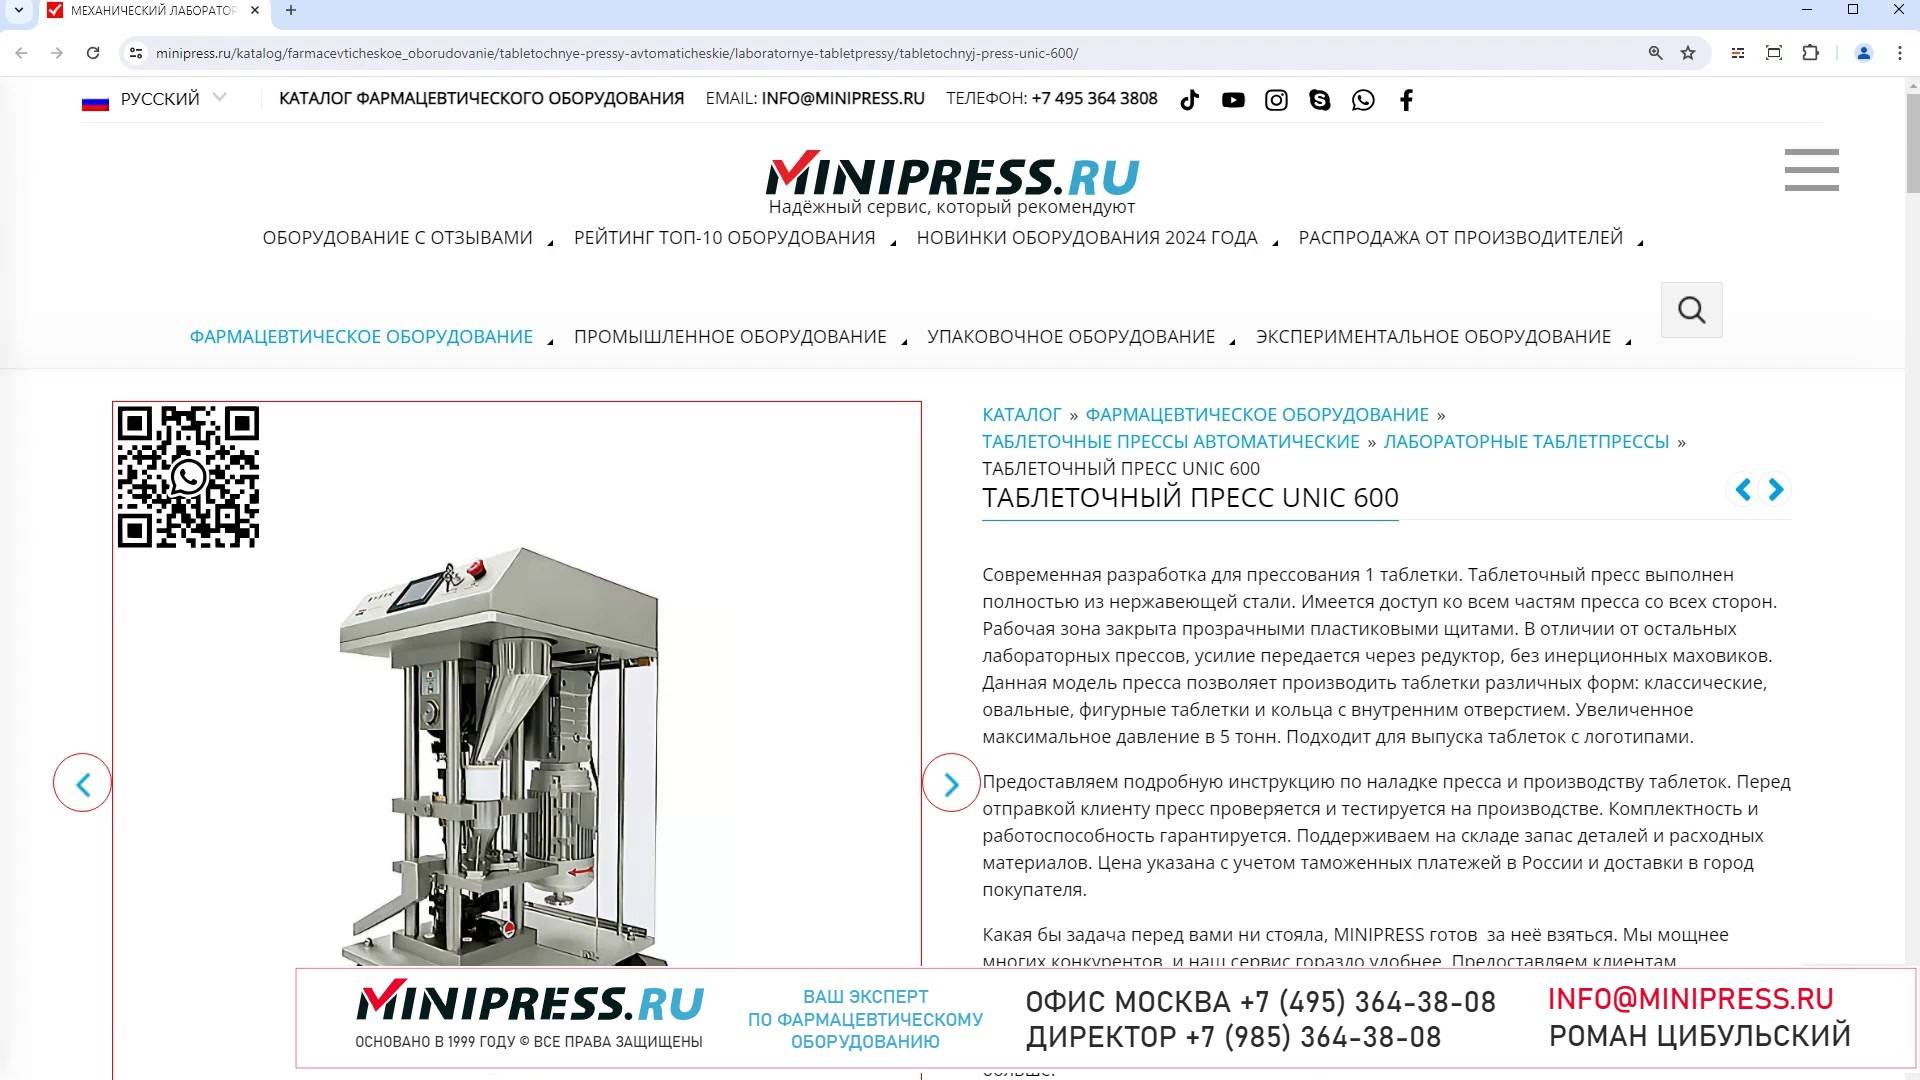 Minipress.ru Таблеточный пресс UNIC 600